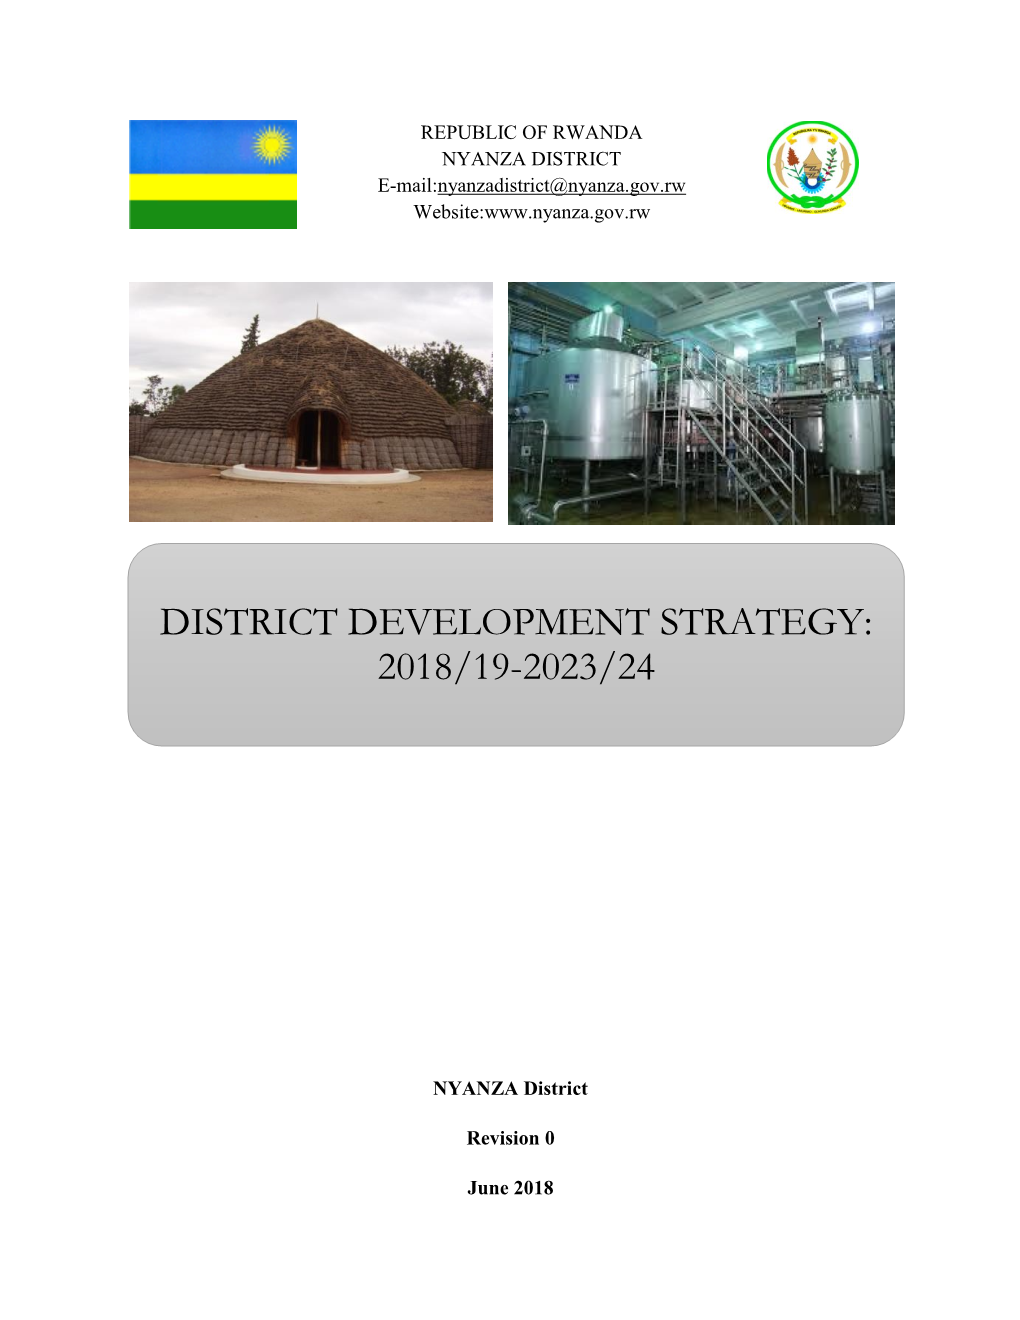 District Development Strategy: 2018/19-2023/24